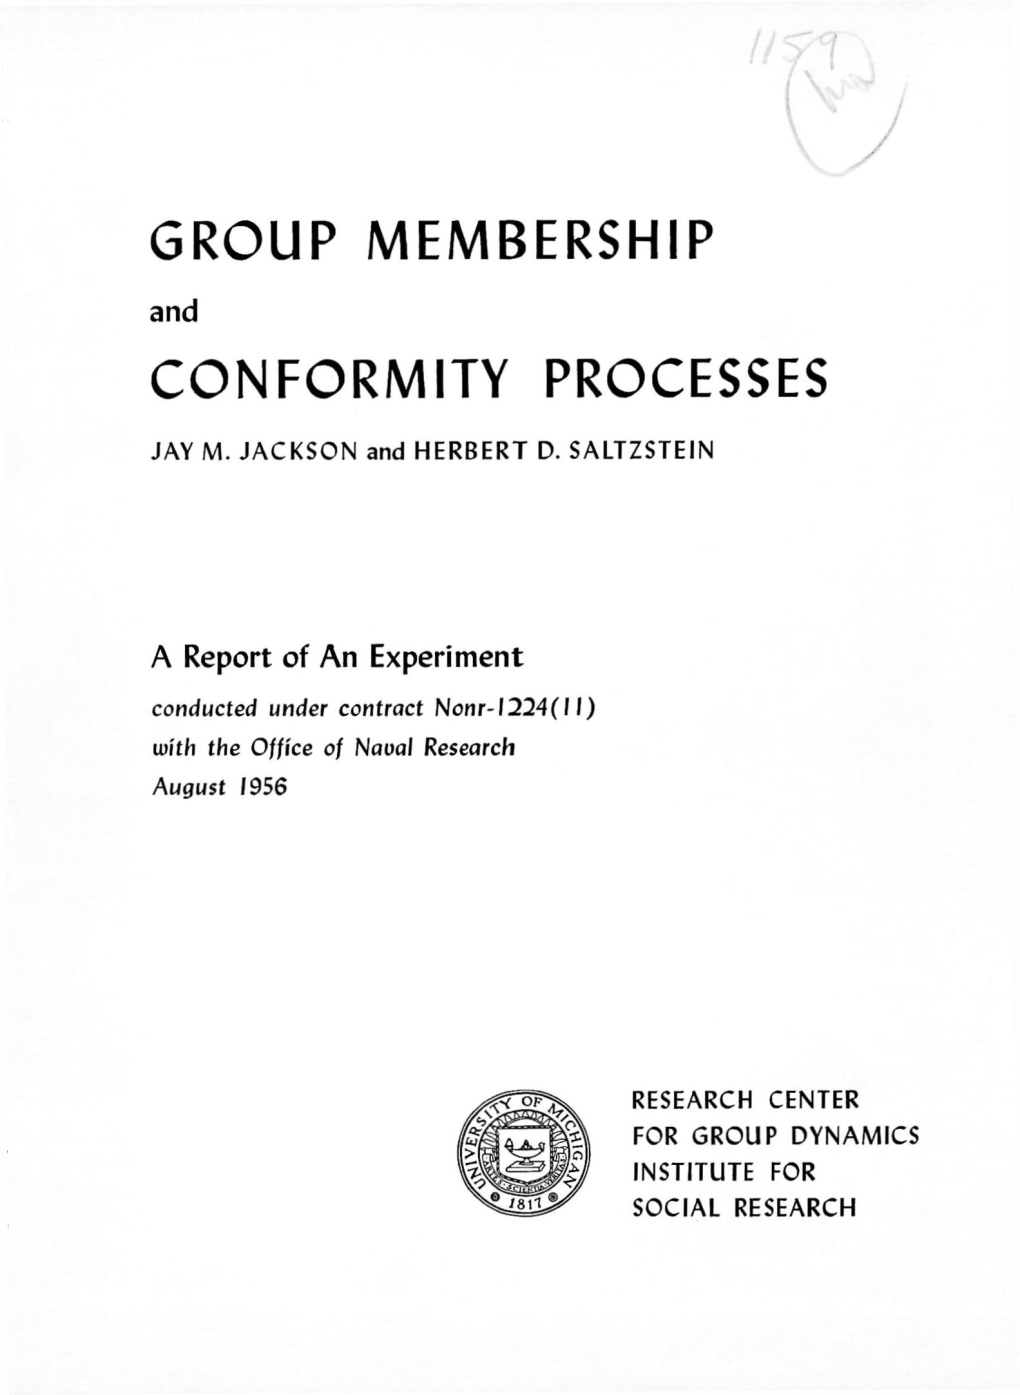 Group Membership Conformity Processes